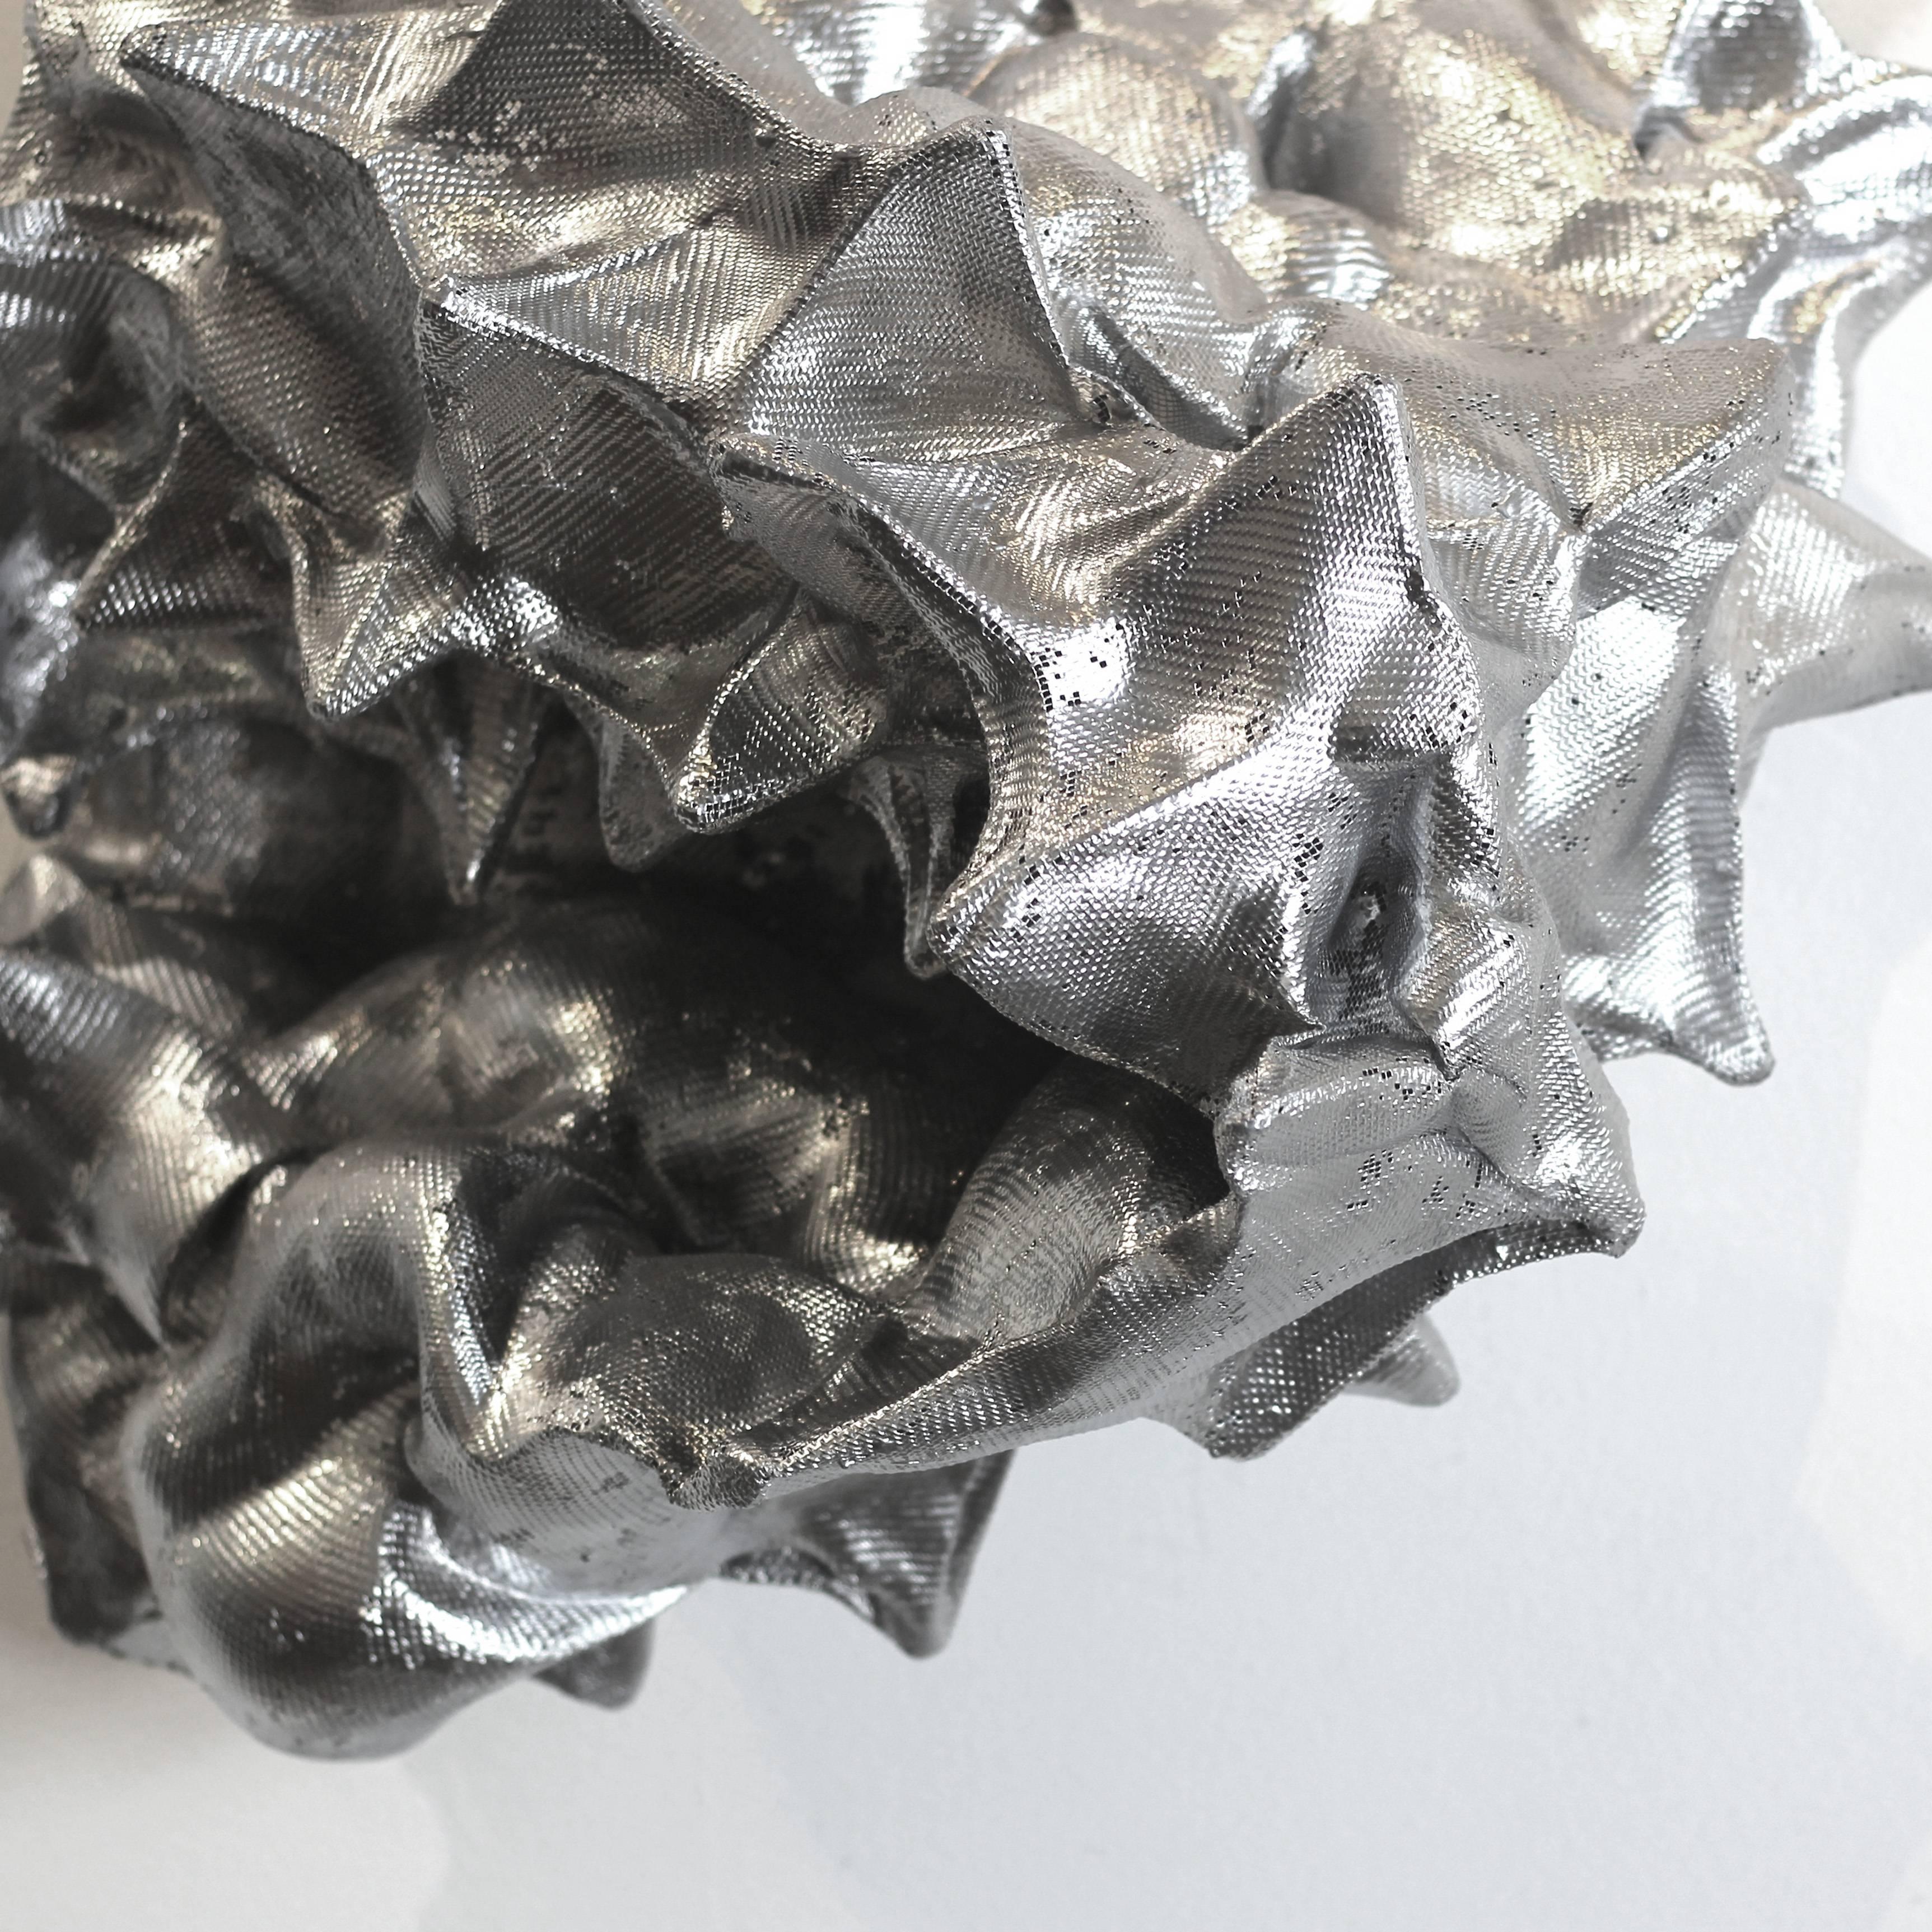 Silver Sea Form - Silver Three-Dimensional Lightweight Metal Wall Art - Contemporary Sculpture by Atticus Adams